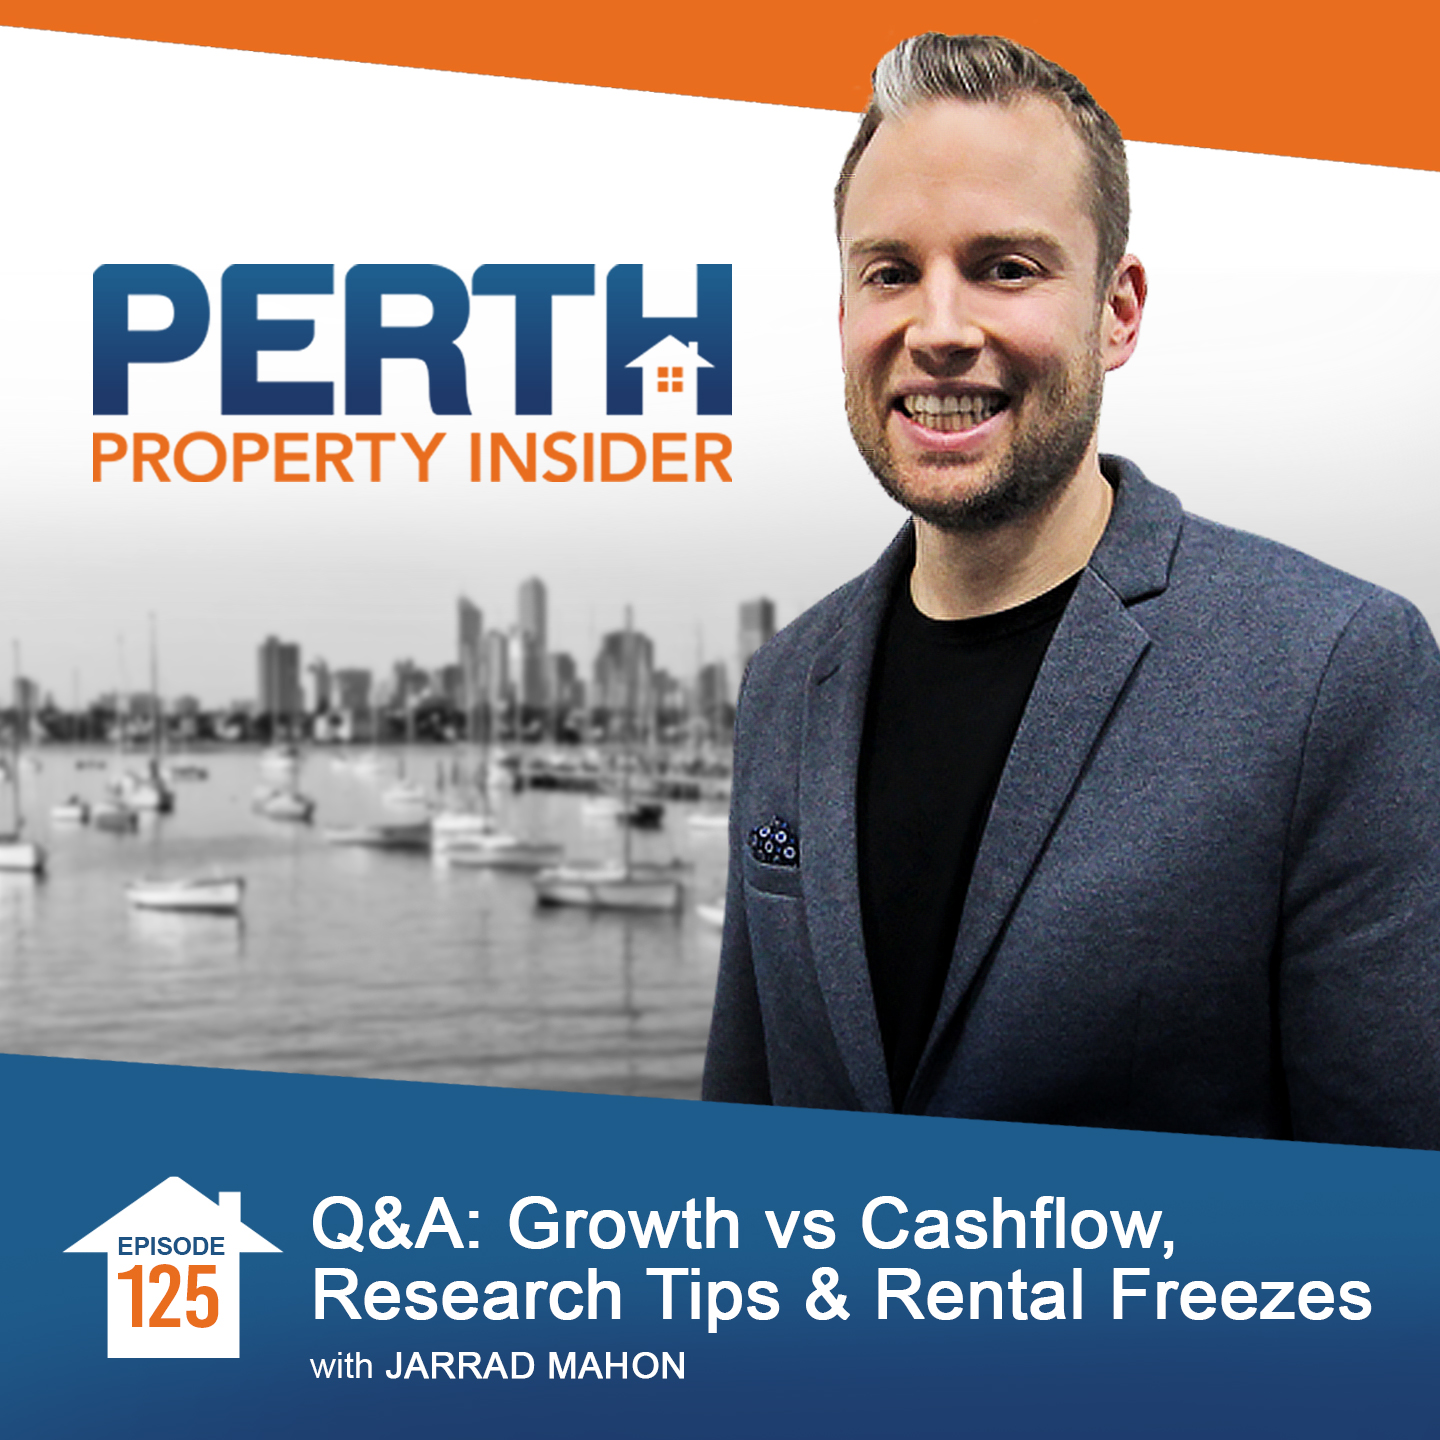 Q&A: Growth vs Cashflow, Research Tips & Rental Freezes